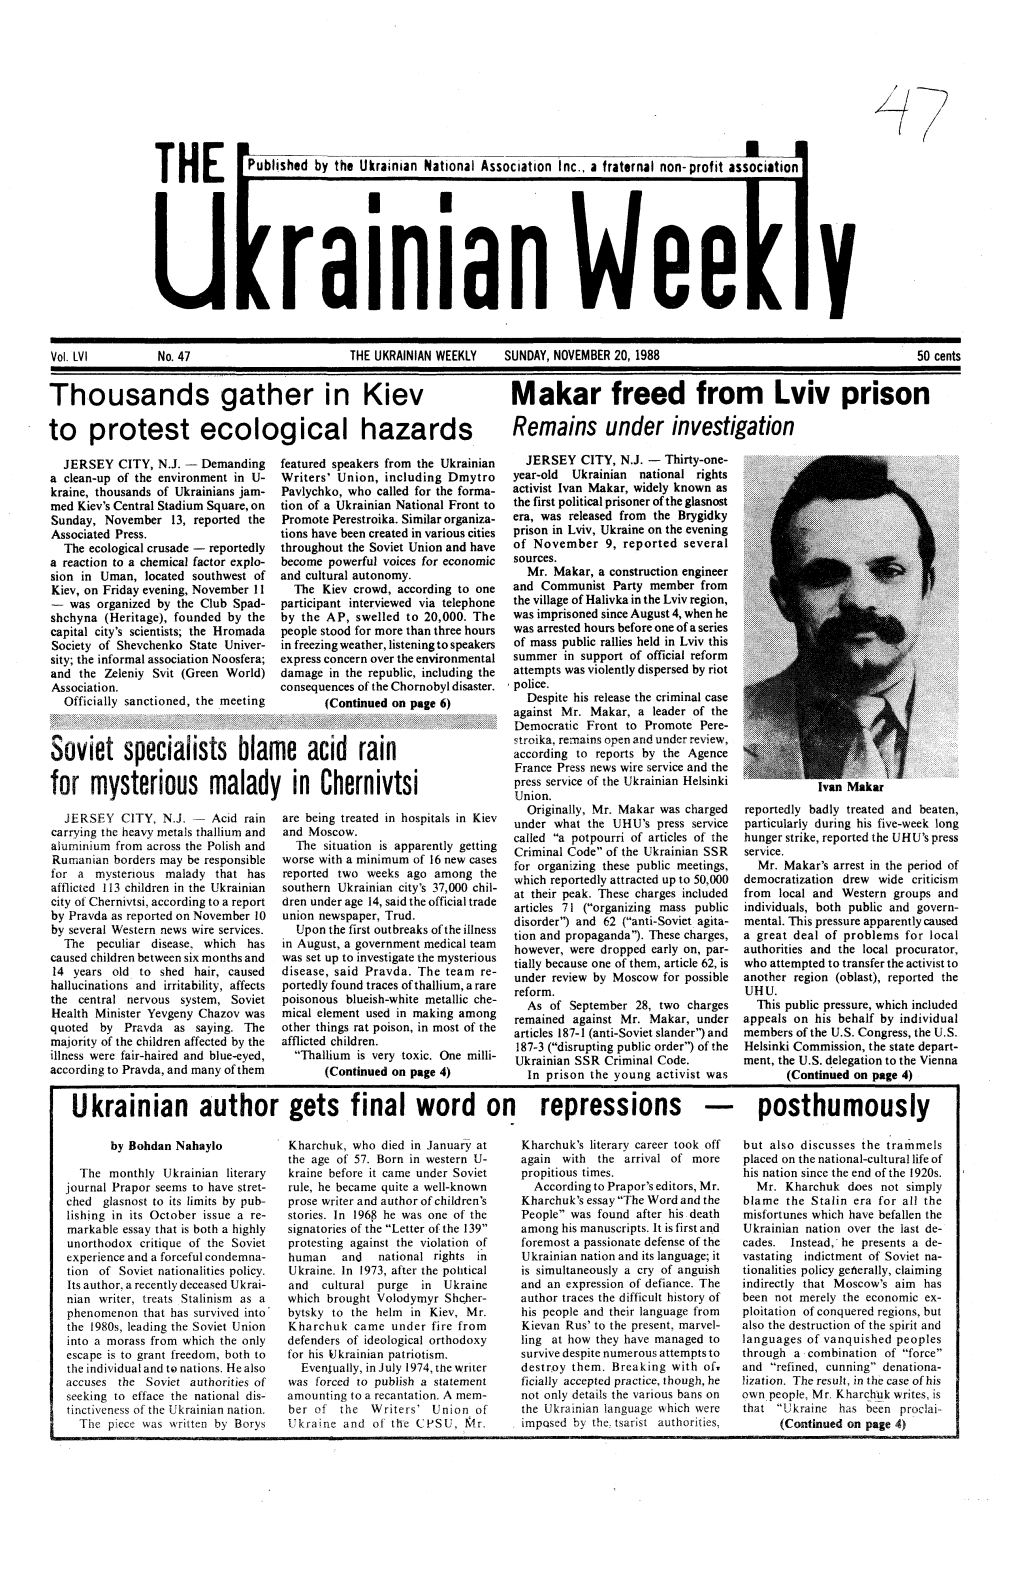 The Ukrainian Weekly 1988, No.47